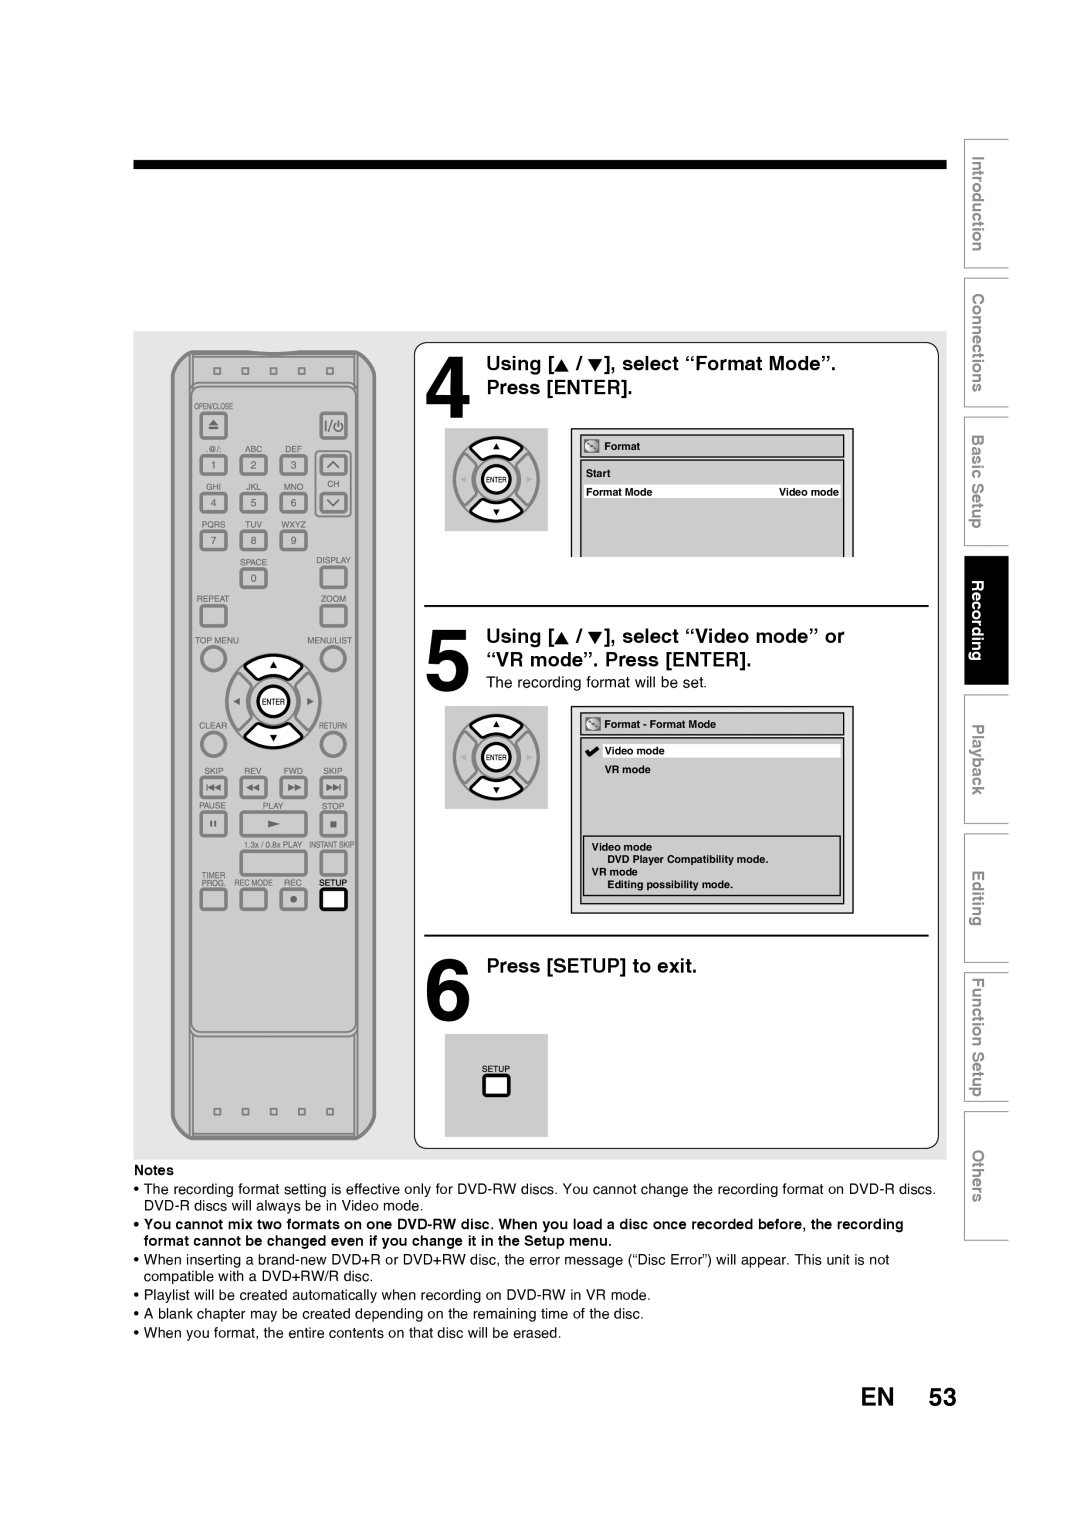 Toshiba D-RW2SU/D-RW2SC Using K / L, select “Format Mode” Press ENTER, Press SETUP to exit, Editing Function Setup Others 